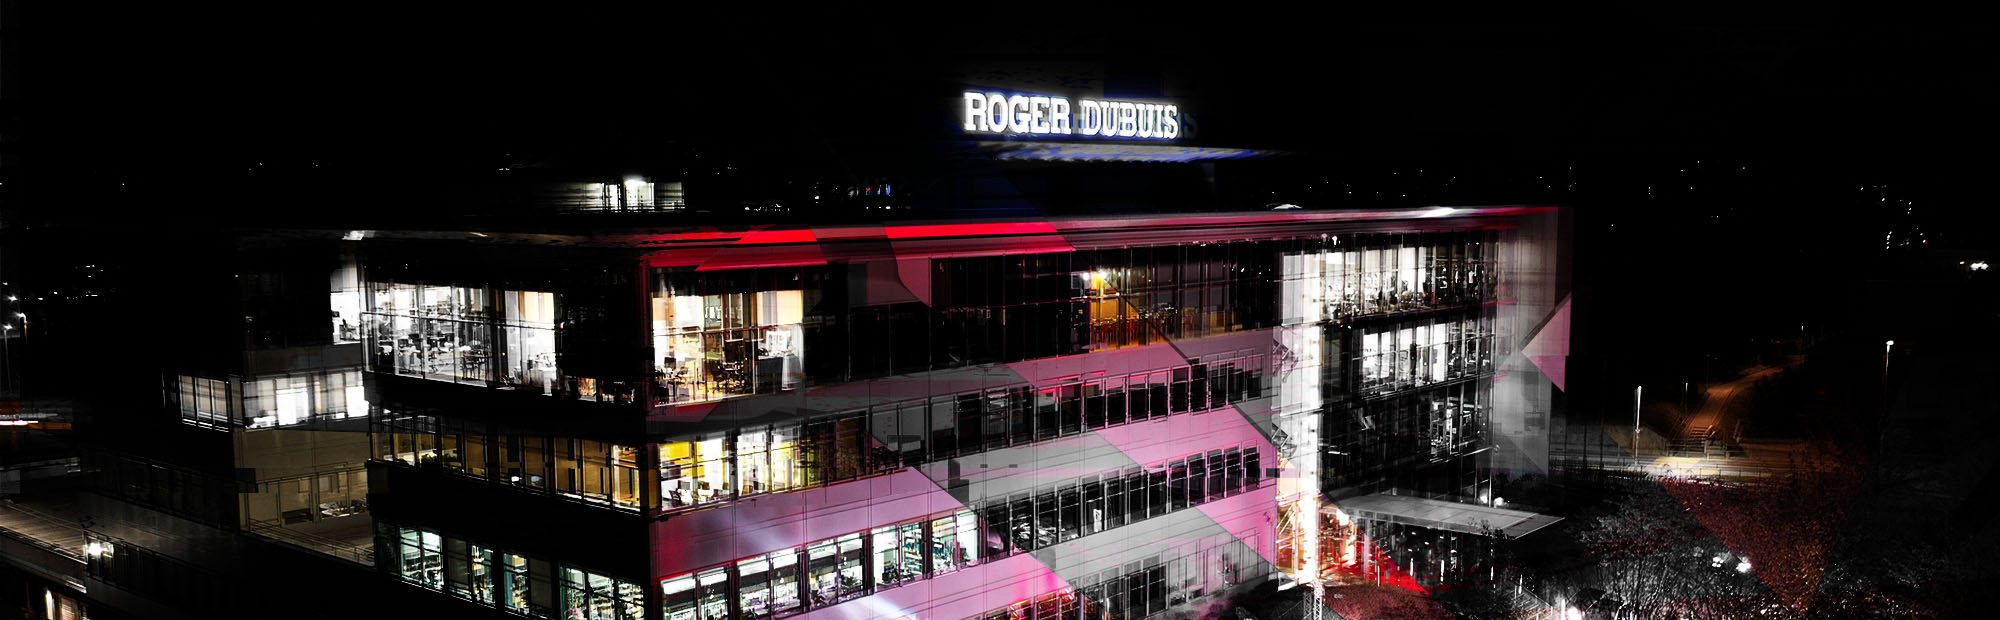 Roger Dubuis Macau